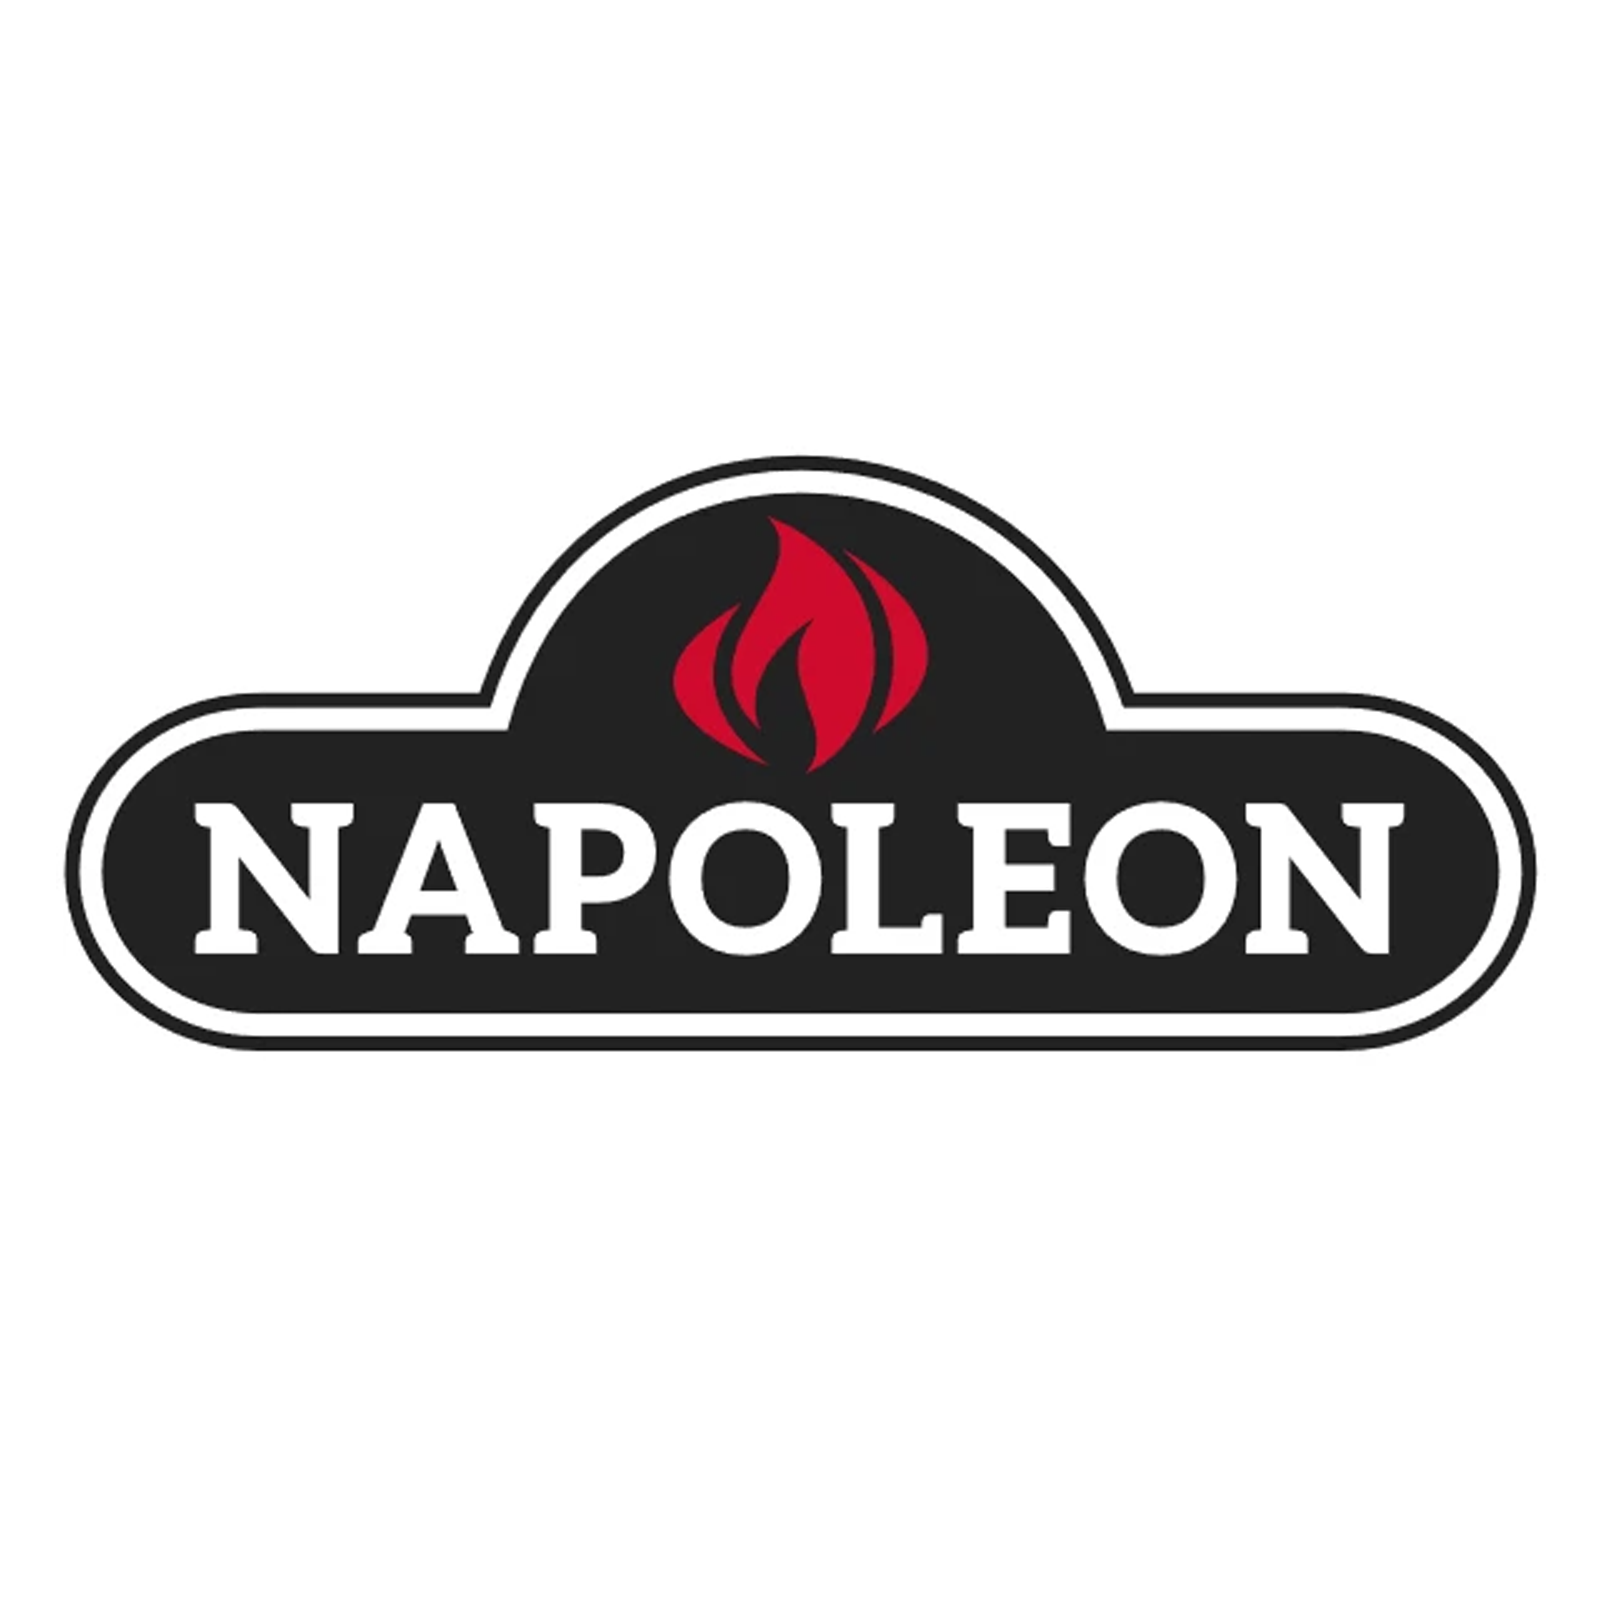 Napoleon Natural Gas Modulating Valve Regulator with Remote Control - GD826N